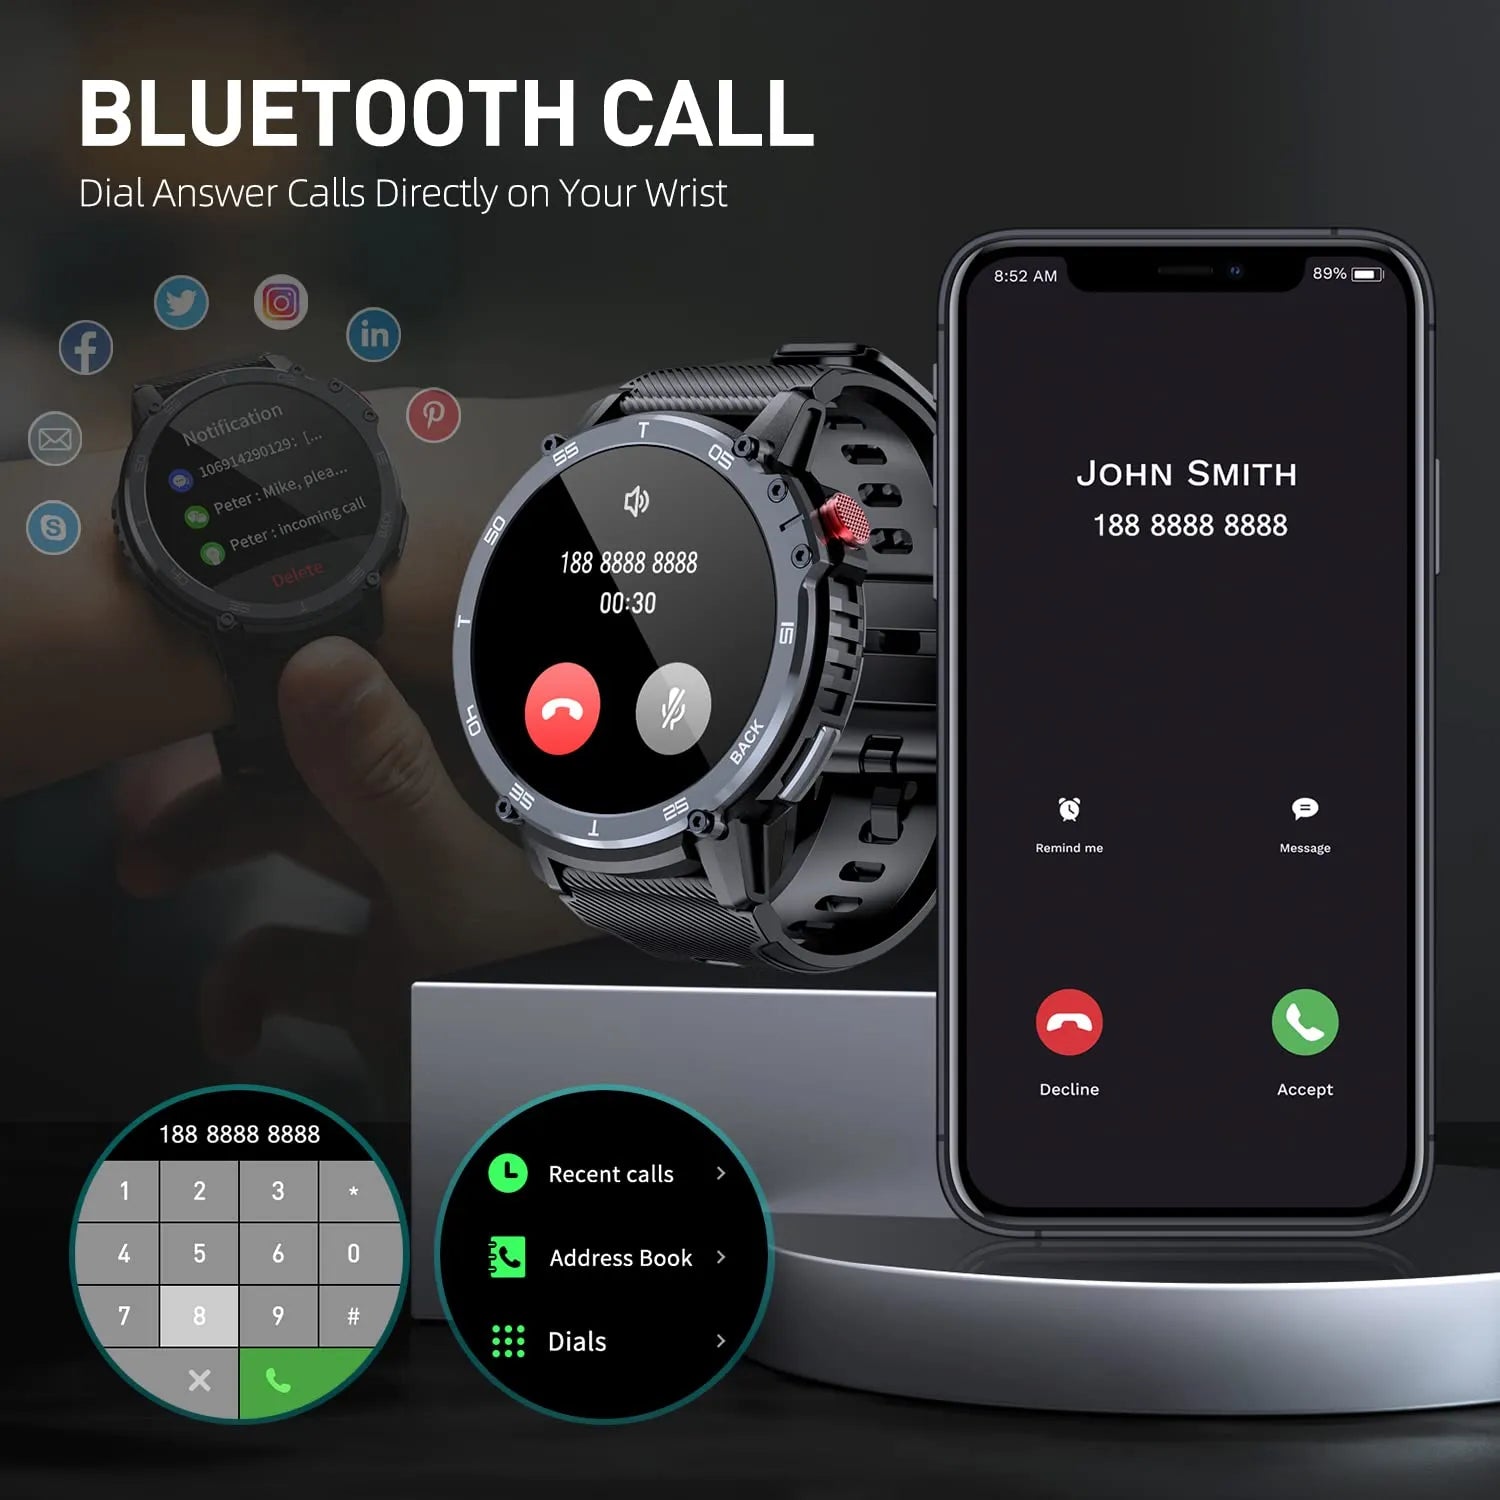 Lenovo New 4G ROM 1G RAM Smart Watch 1.6 inch 400mAh Sport Fitness Watches Men Bluetooth Call 3ATM Waterproof Smartwatch 2023